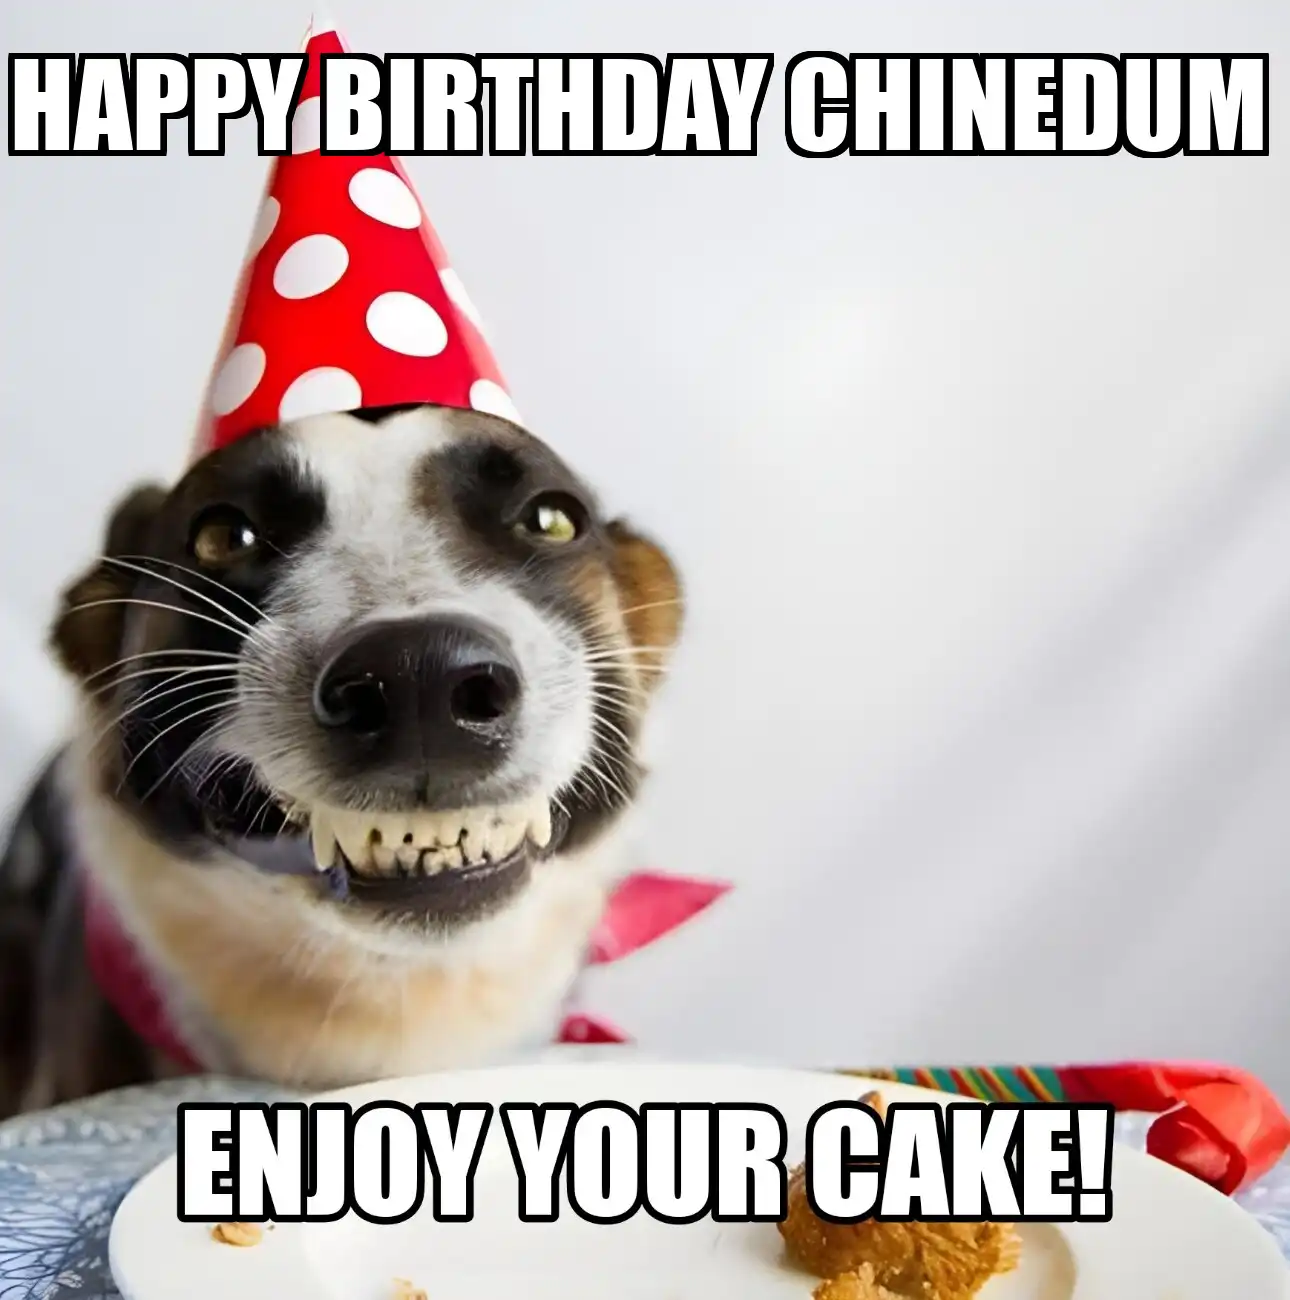 Happy Birthday Chinedum Enjoy Your Cake Dog Meme